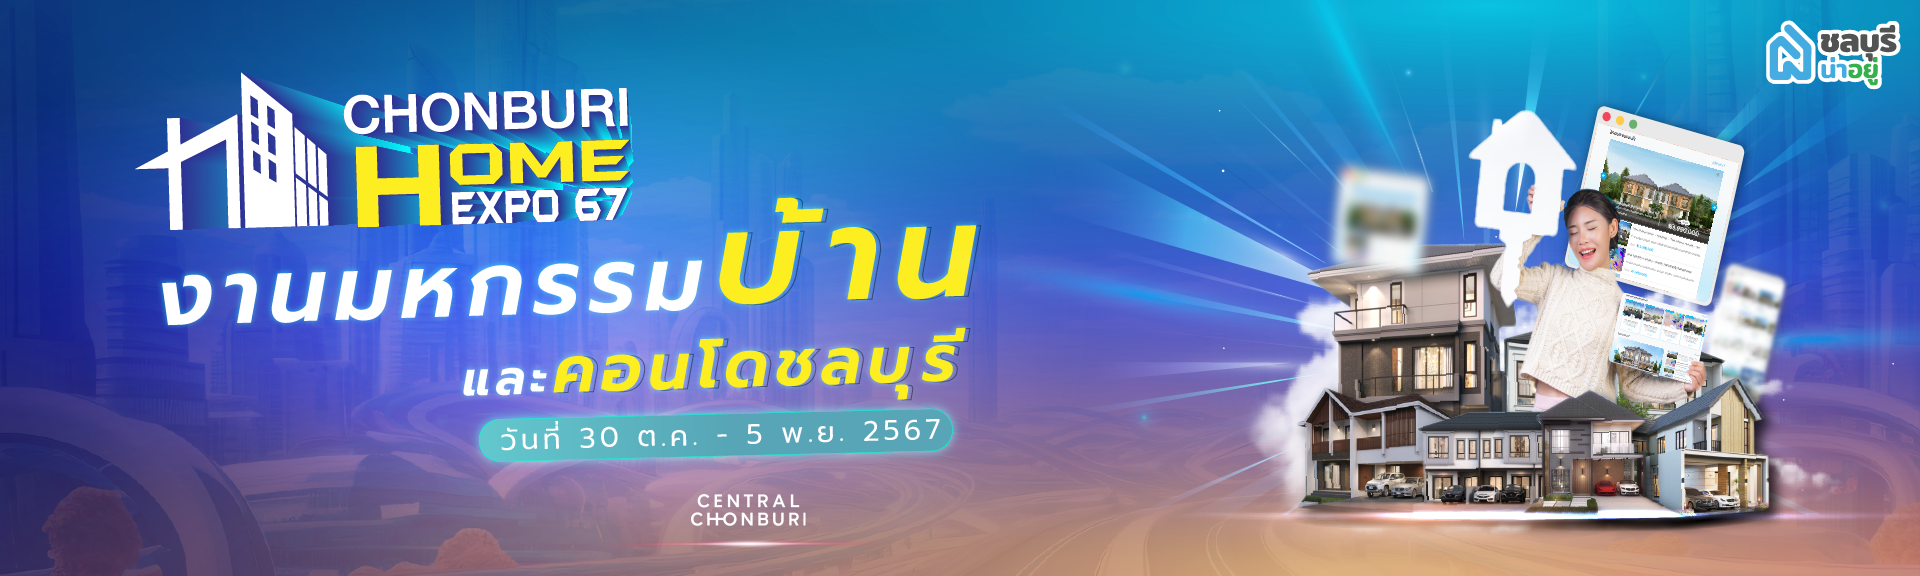 Banner A Chonburi Home Expo 67